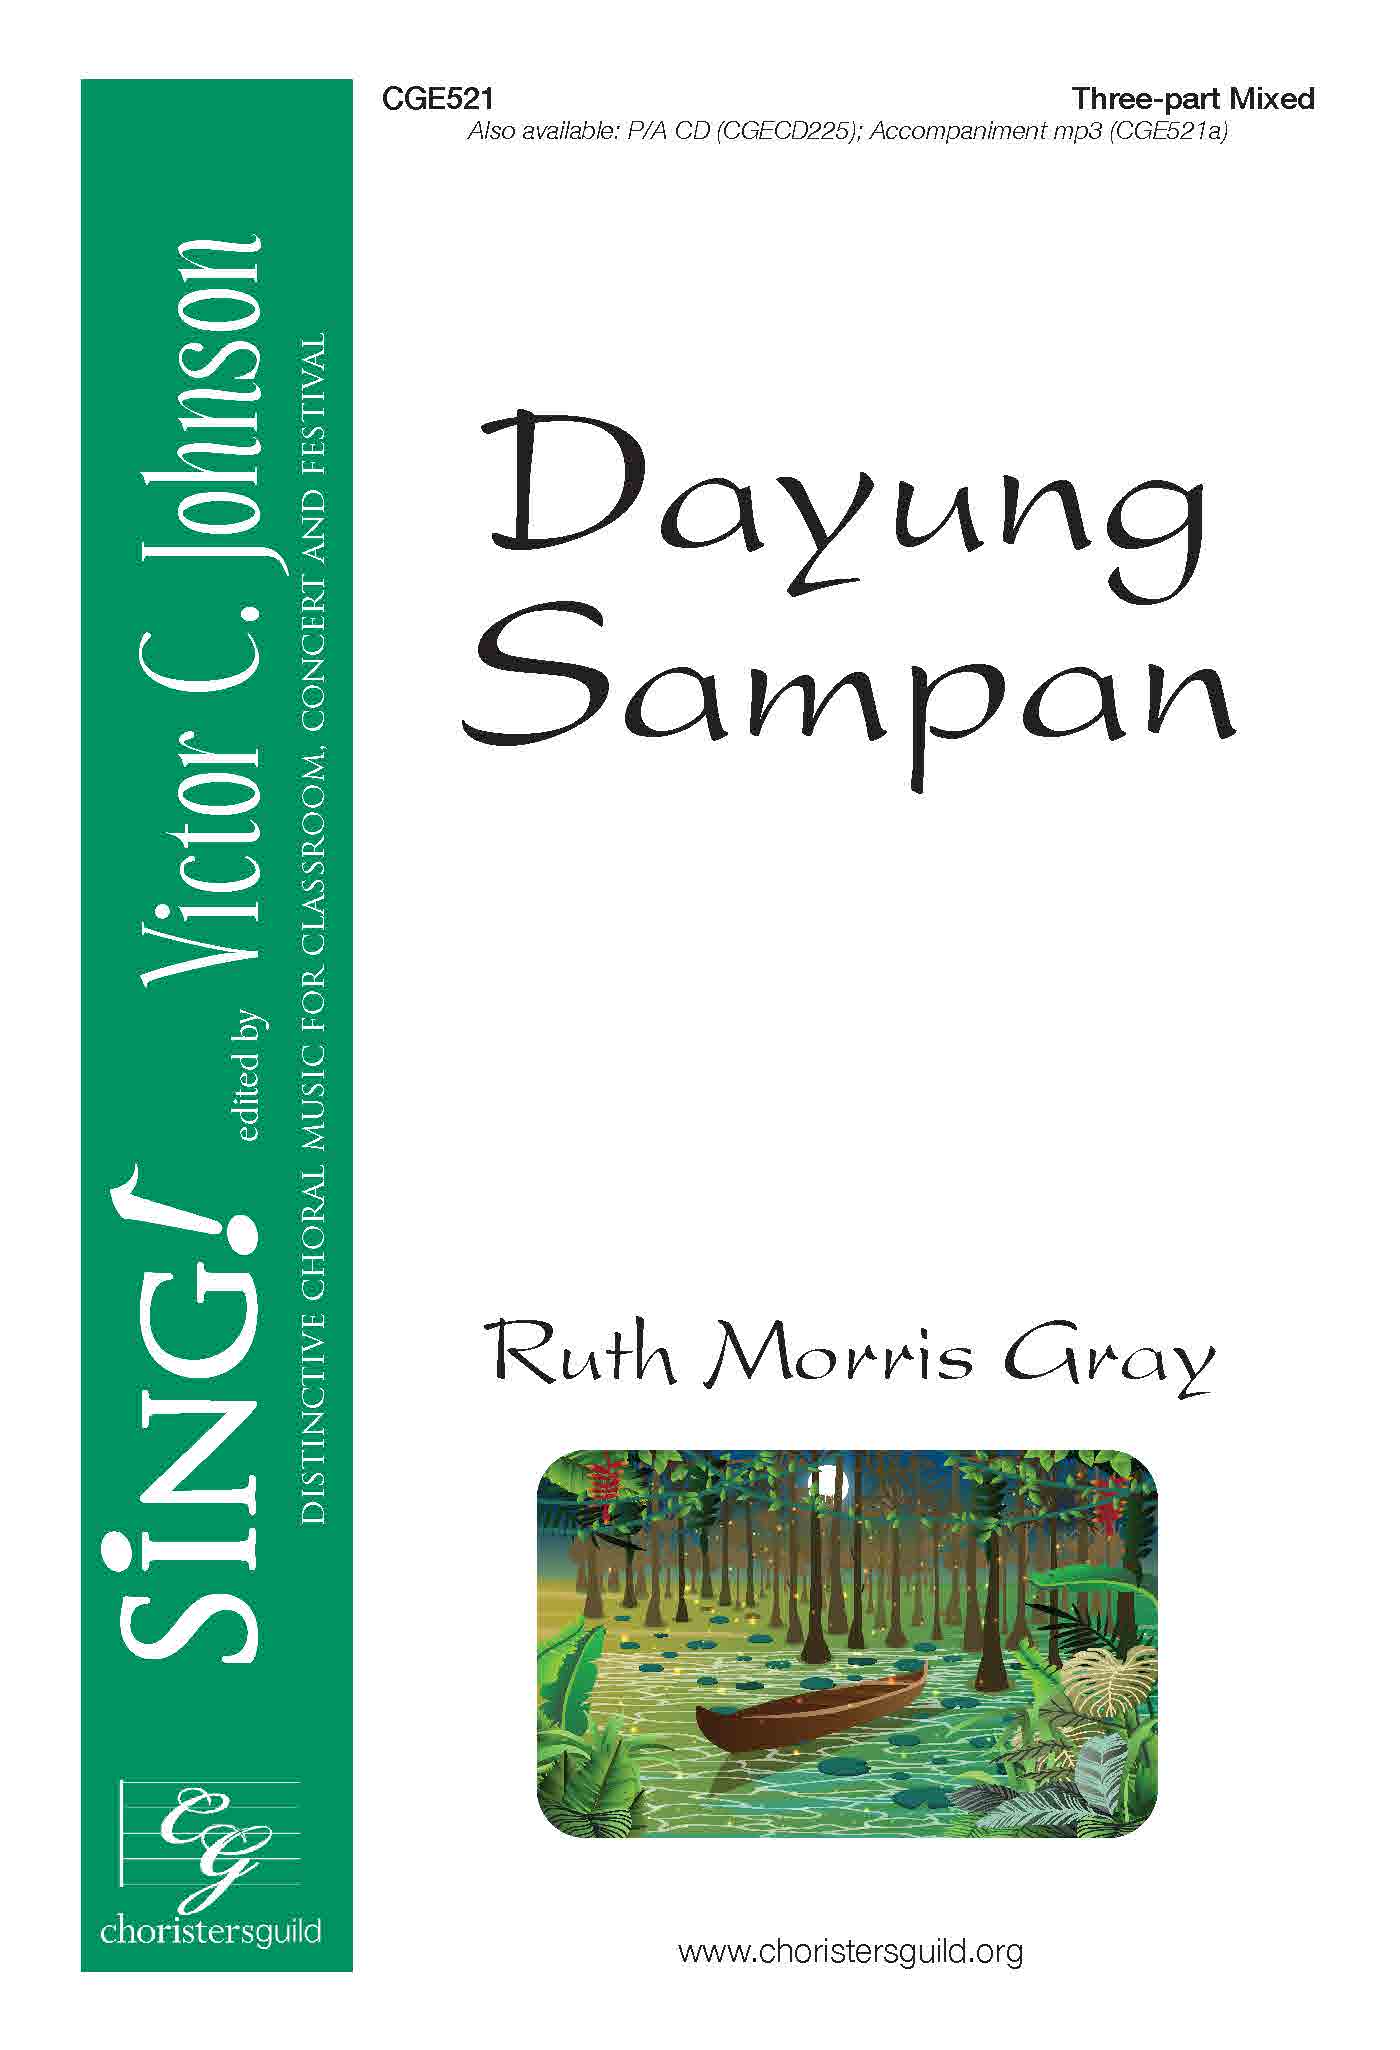 Dayung Sampan - Three-part Mixed